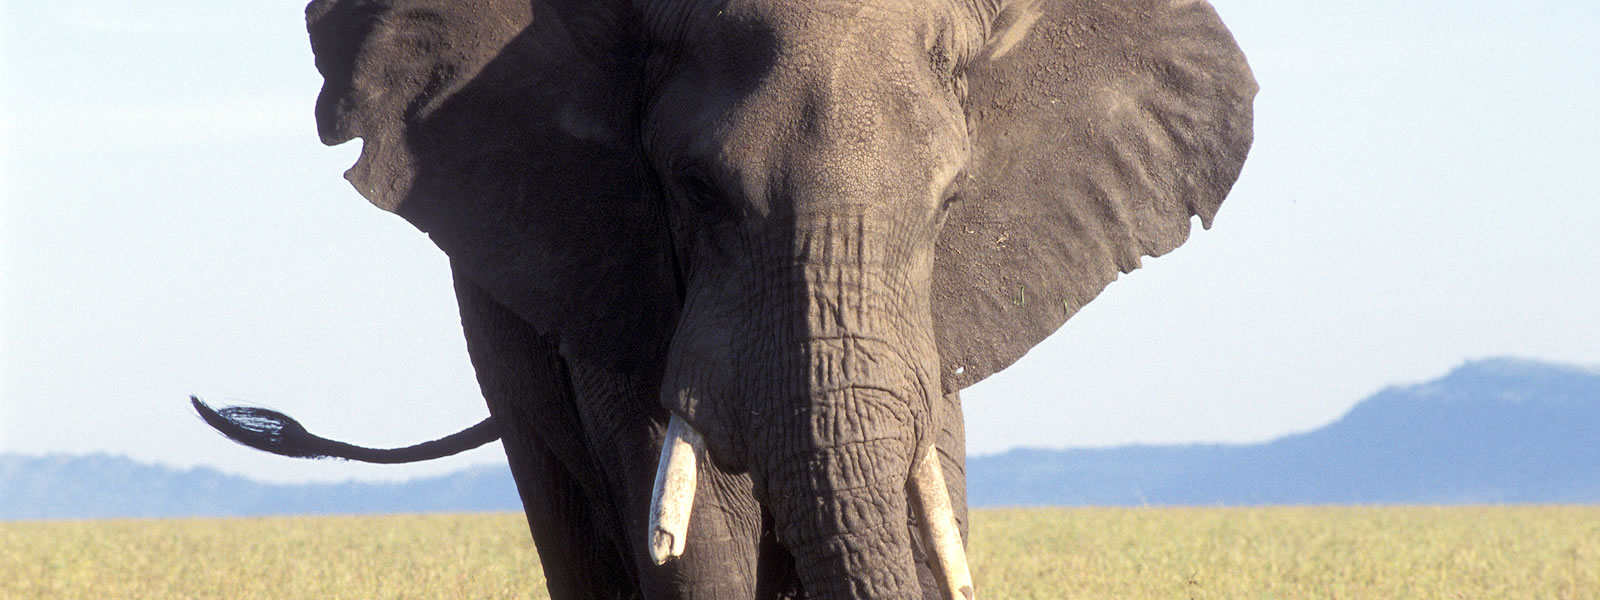 An African elephant, Loxodonta africana, walking through grass. 